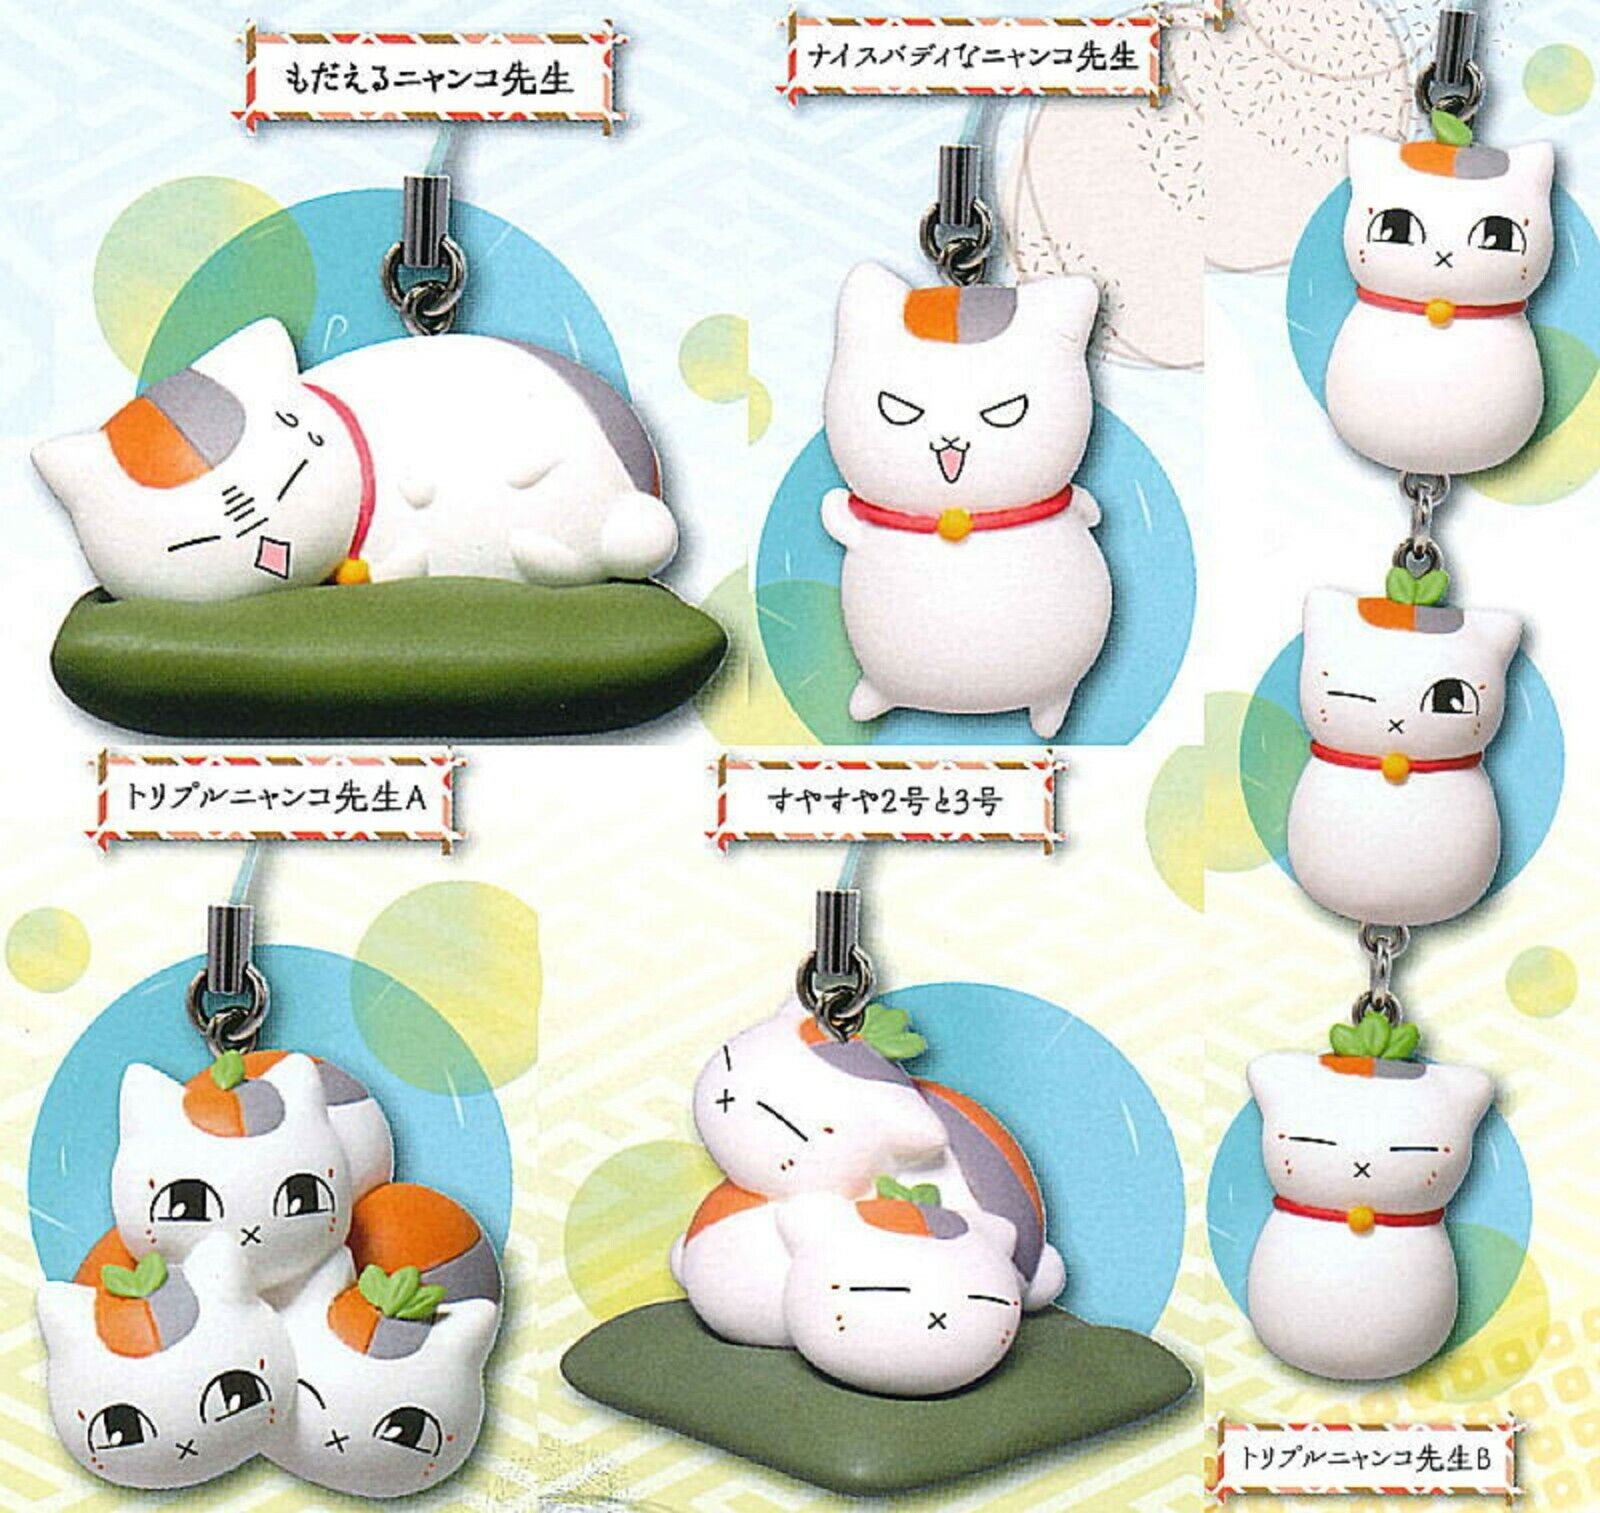 Nyanko Sensei Tsurezure Strap Capsule Toy 5 Pcs Complete Set Figures Toy Cat